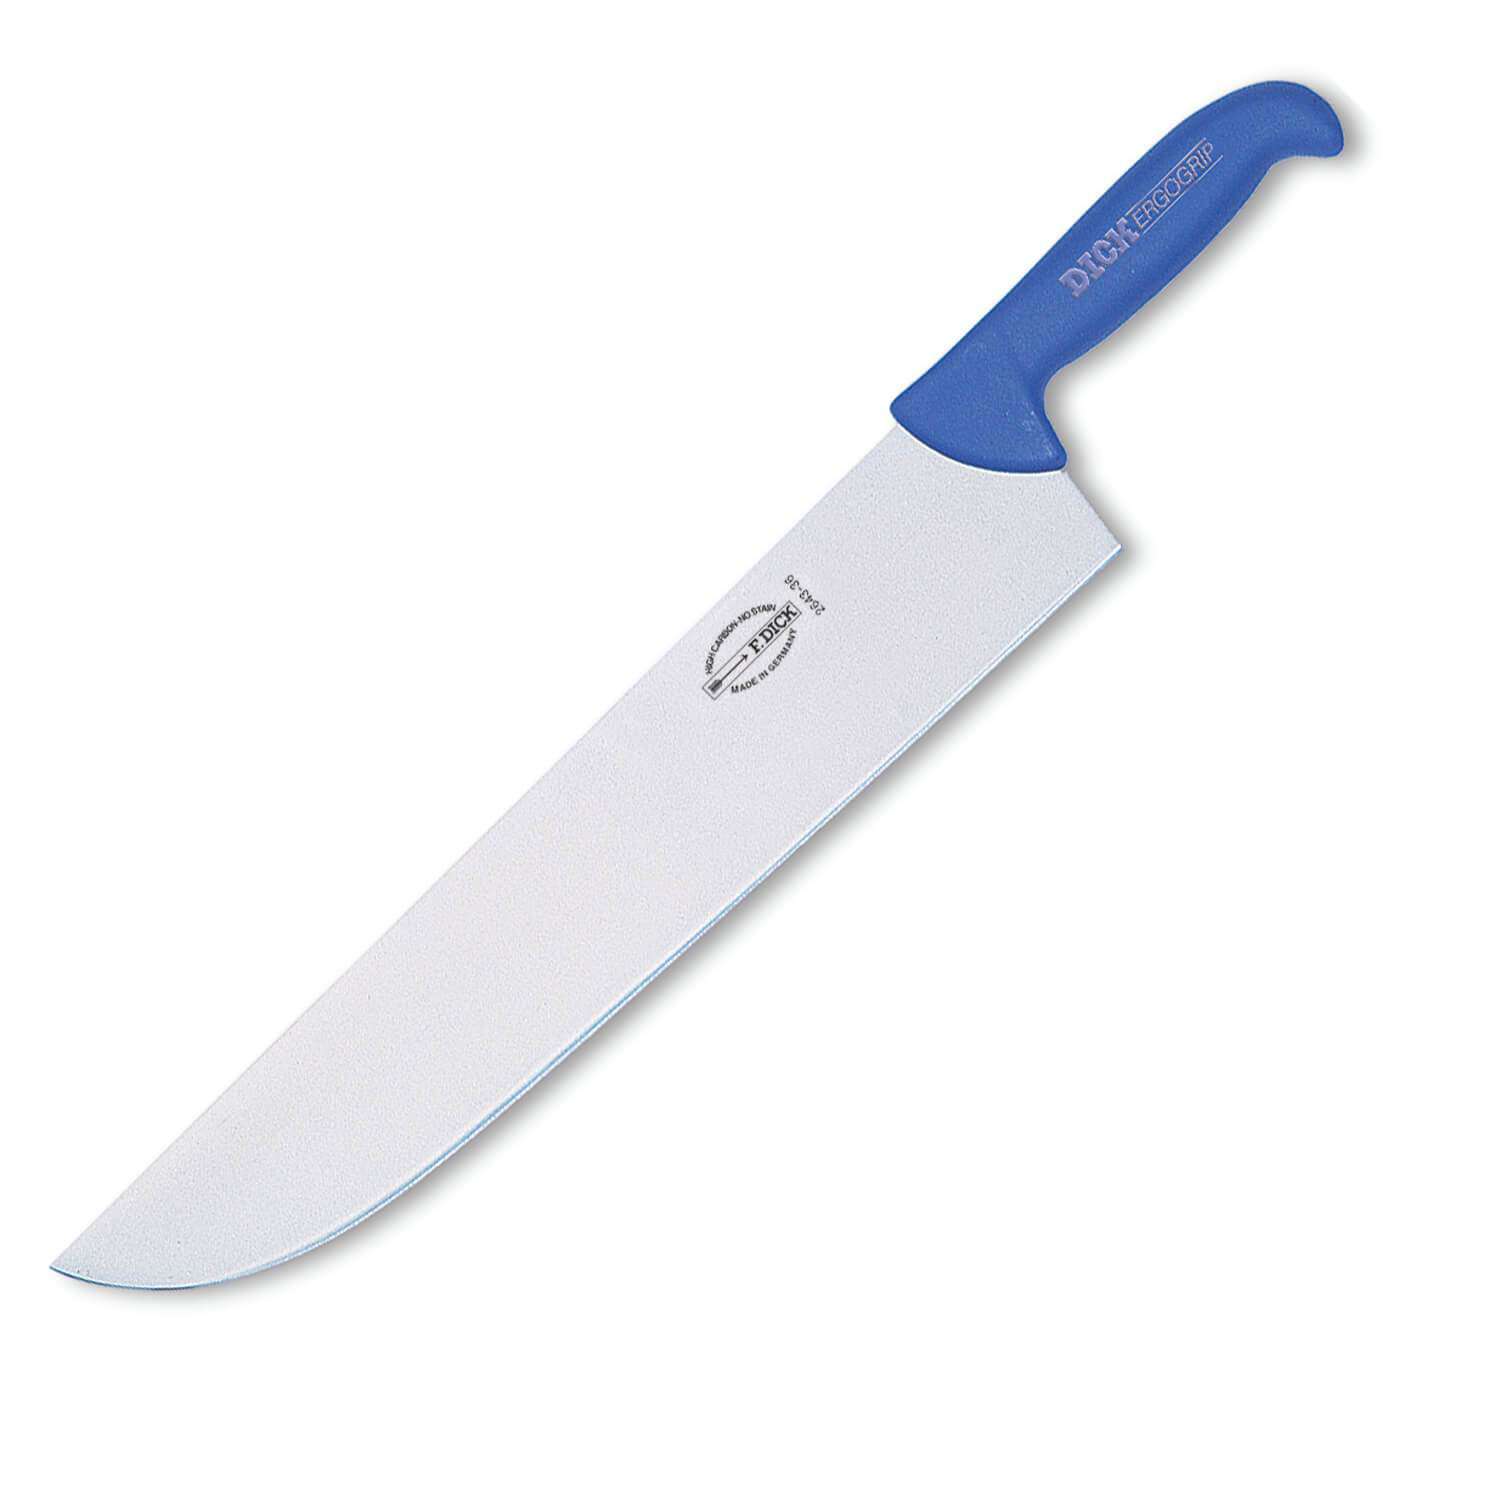 F dick. Ножи dick Ergogrip 30см. F. dick 82007 ножи для забоя. Нож мясника 30 см. Нож Dickies.